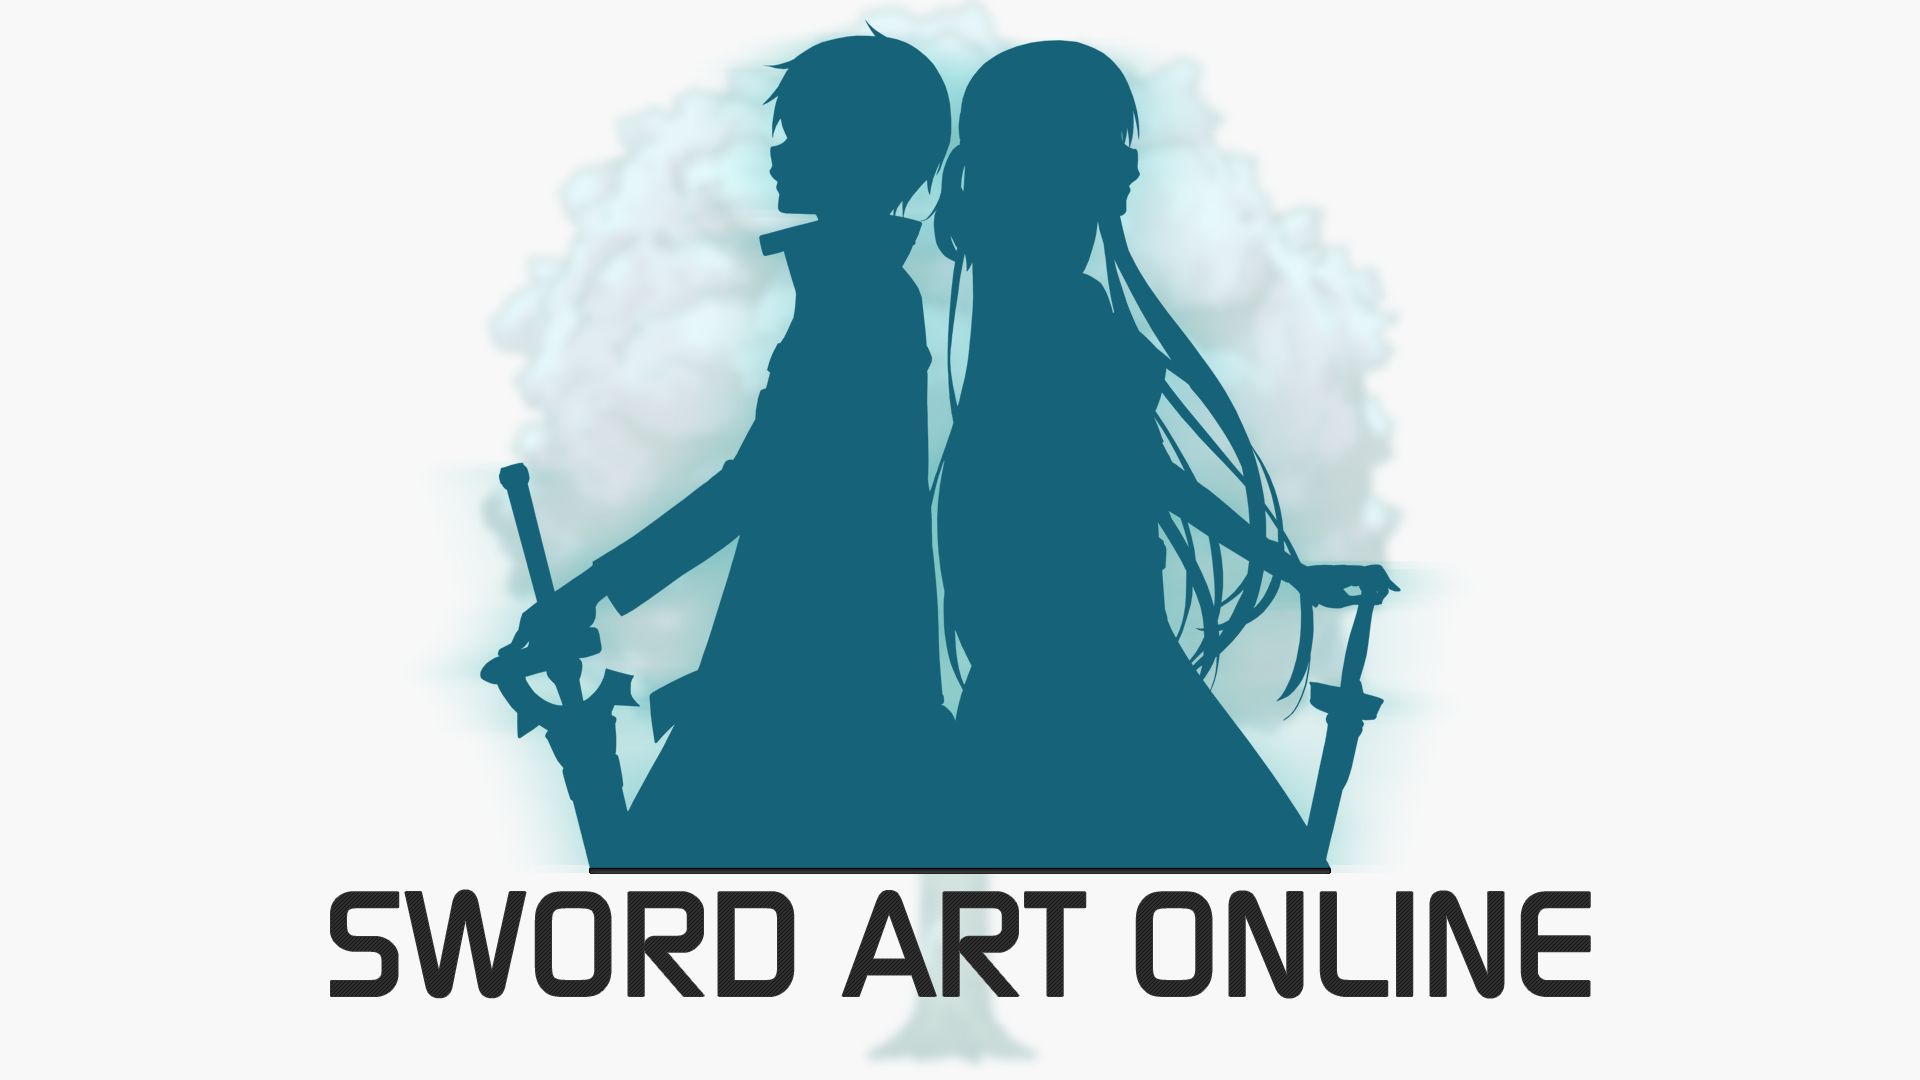 343442 descargar imagen animado, sword art online, asuna yuuki, kirito (arte de espada en línea), sao2: fondos de pantalla y protectores de pantalla gratis